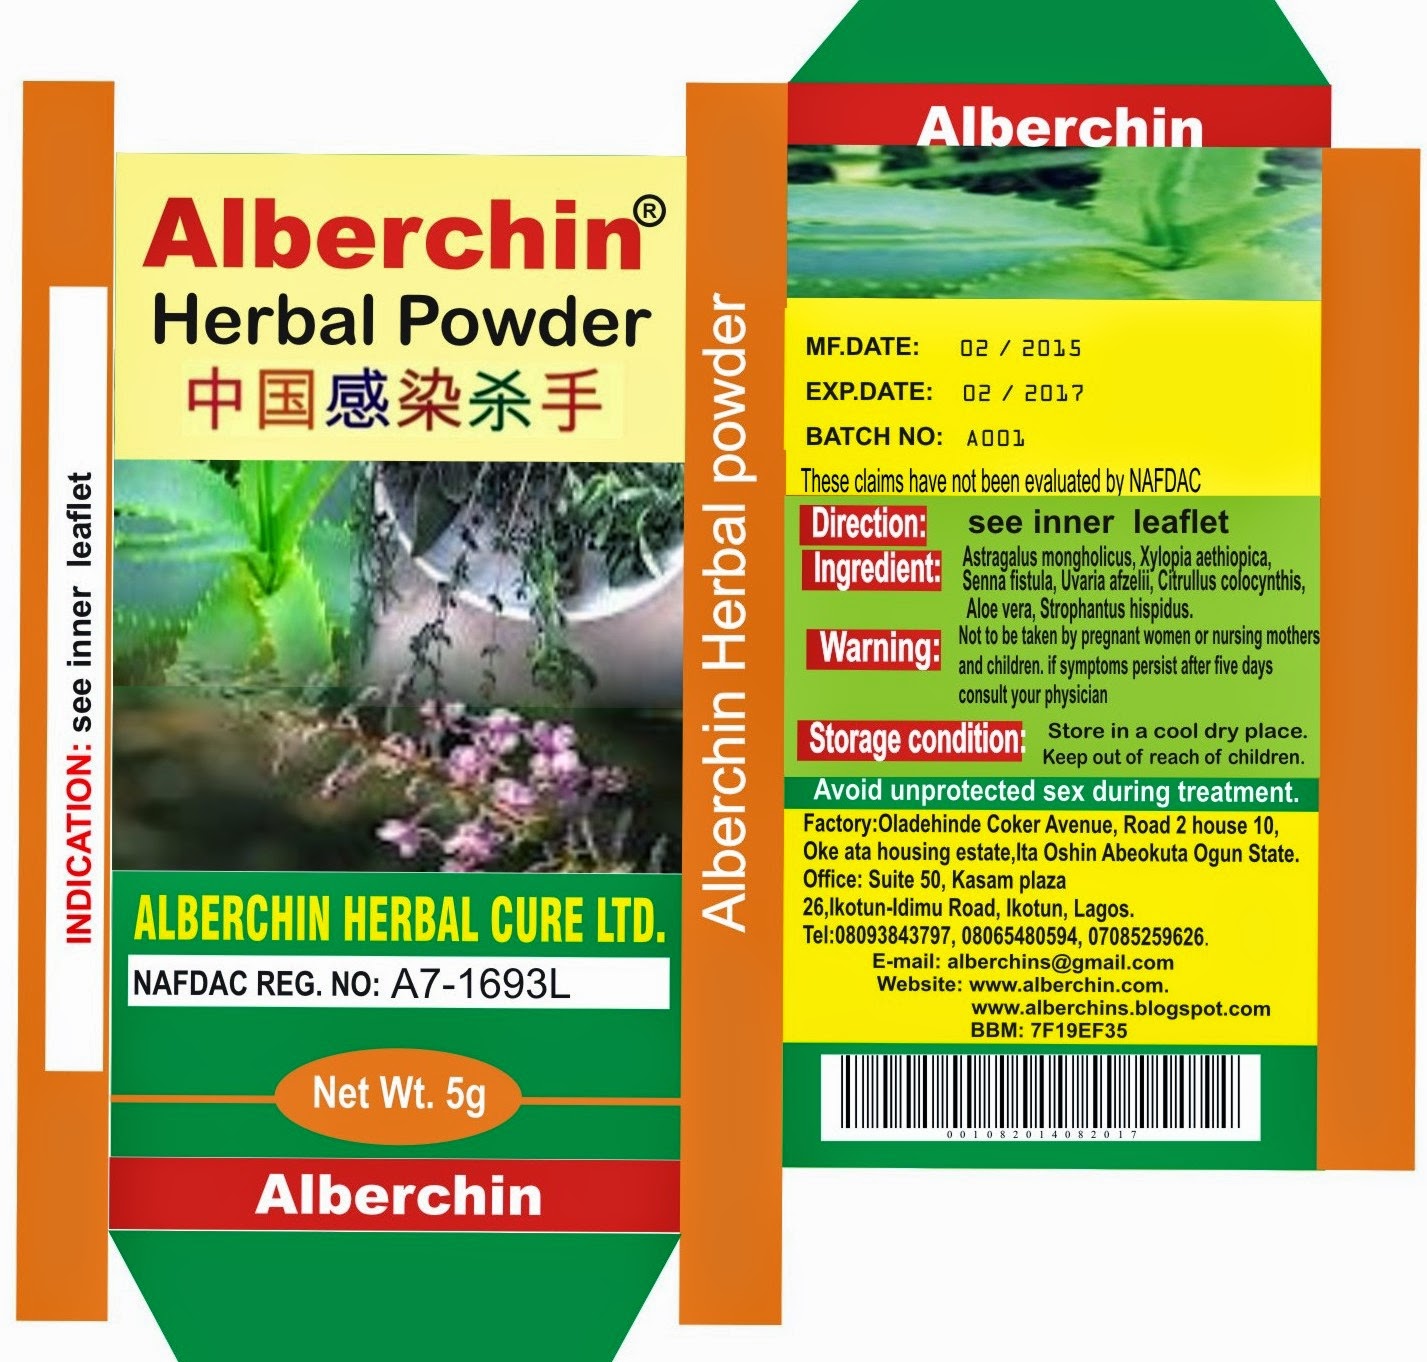 Alberchin herbal powder - The Infection Eradicator